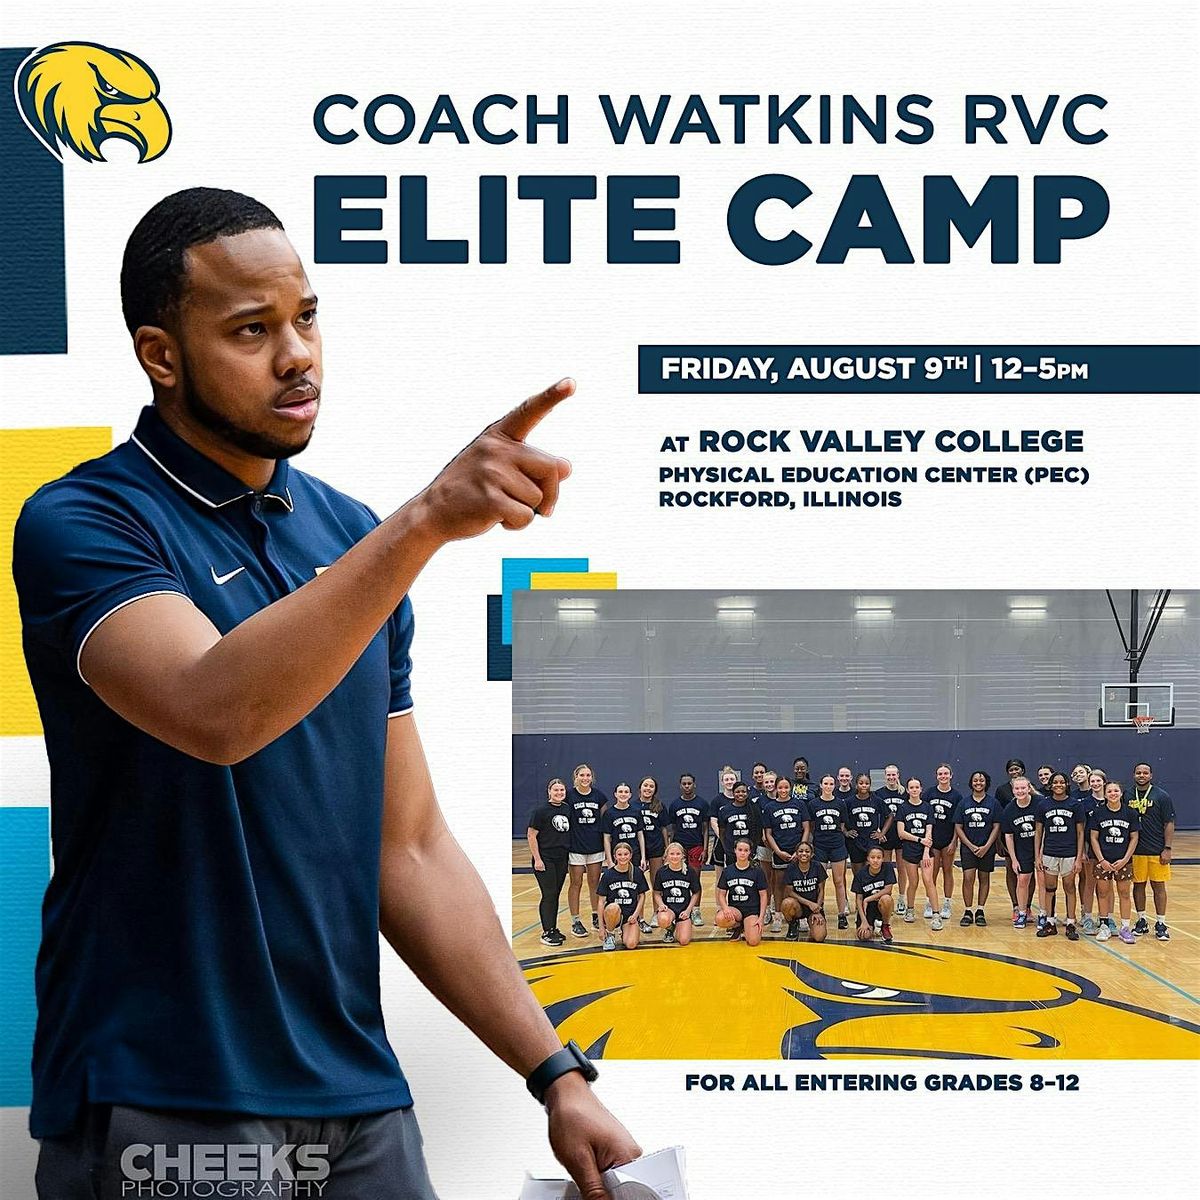 Copy of Coach Watkins RVC Elite Camp